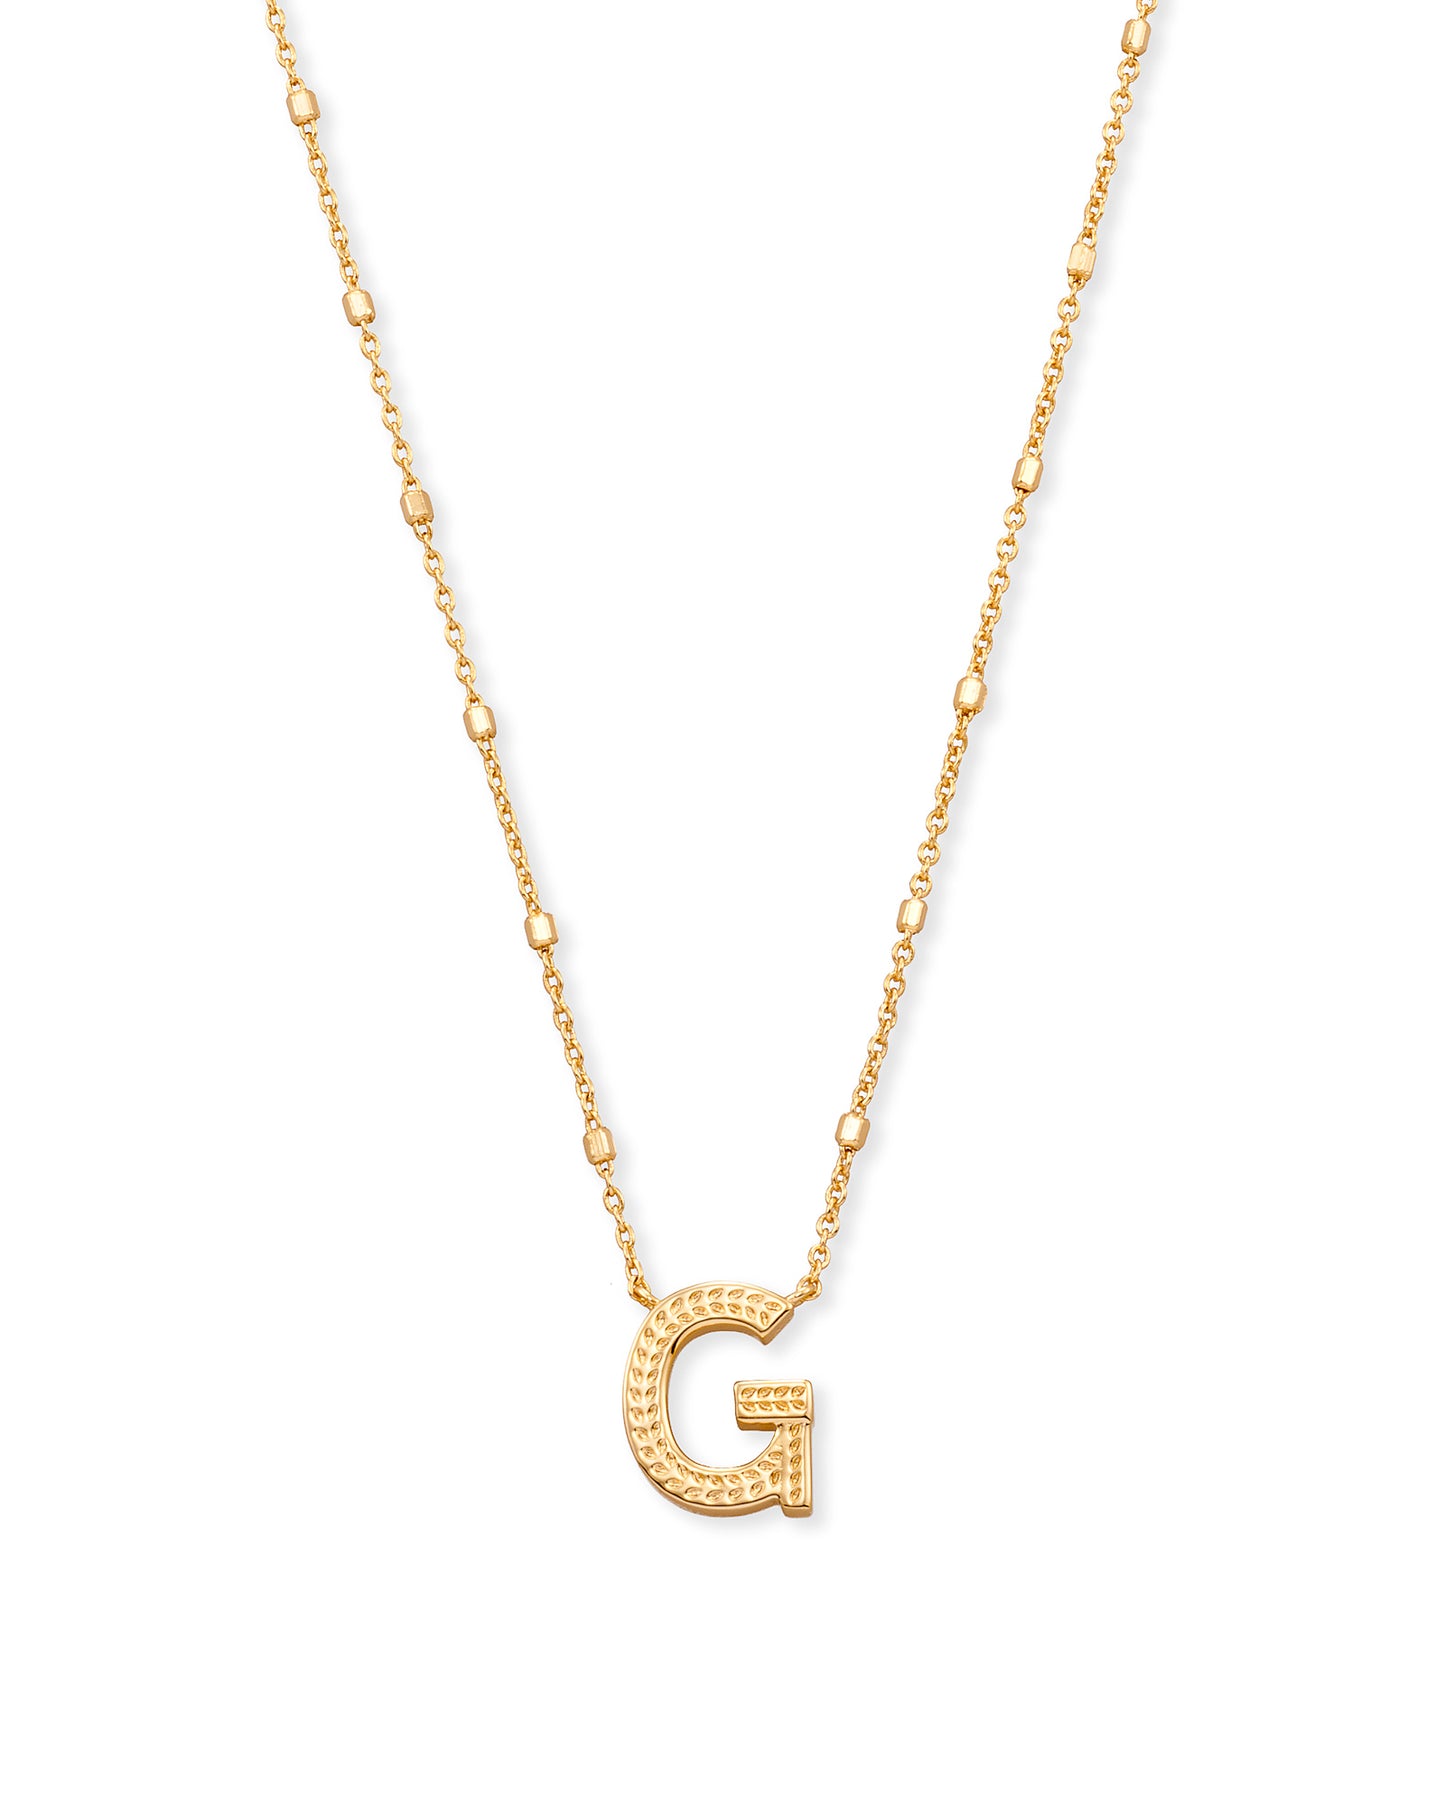 Kendra Scott Initial Pendant Necklace - Gold